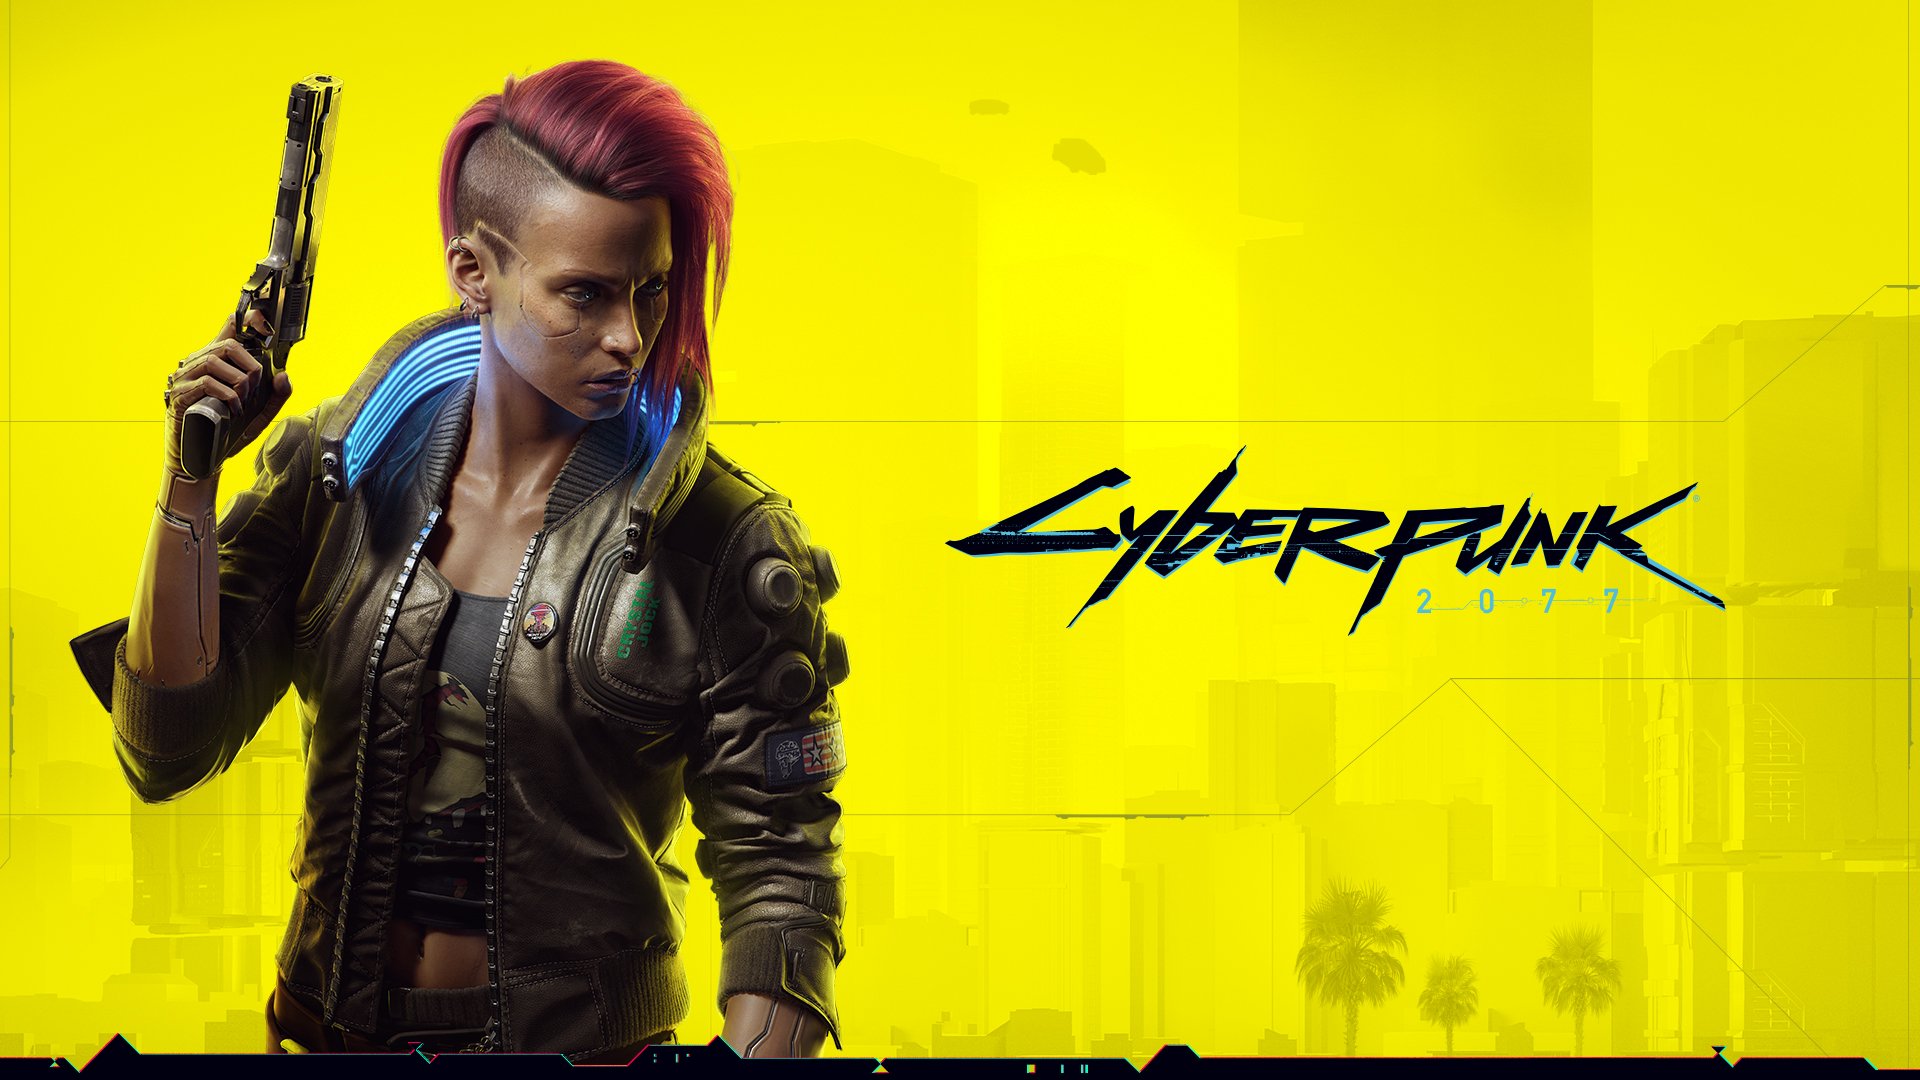 Cyberpunk 2077 V Cyberpunk Redhead Yellow Background Shaved Head Weapon Gun Jacket Yellow Neon Glow 1920x1080